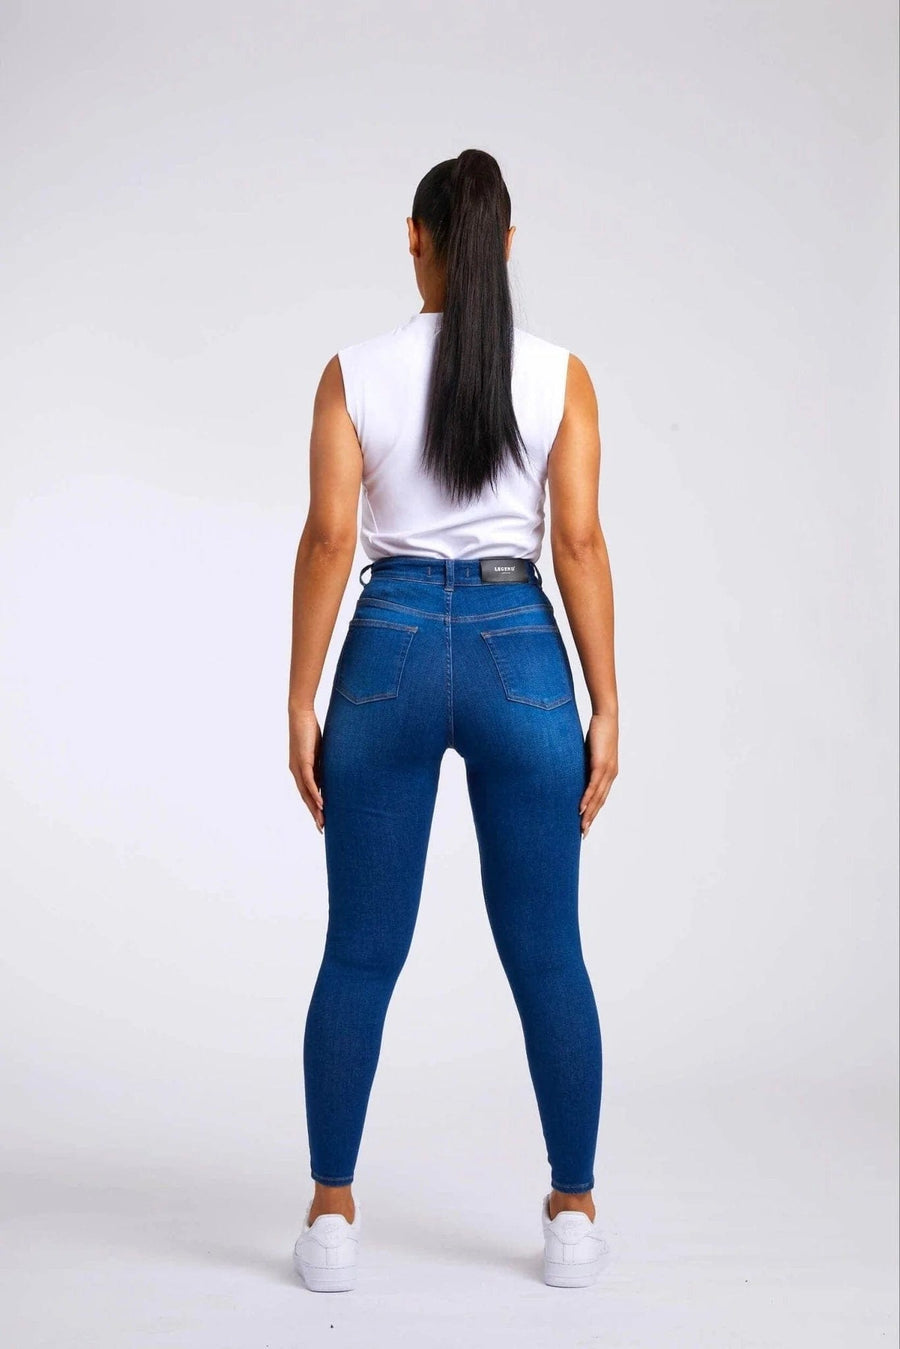 Legend London Women's Jeans SKINNY JEANS RIPPED & REPAIRED - DARK BLUE